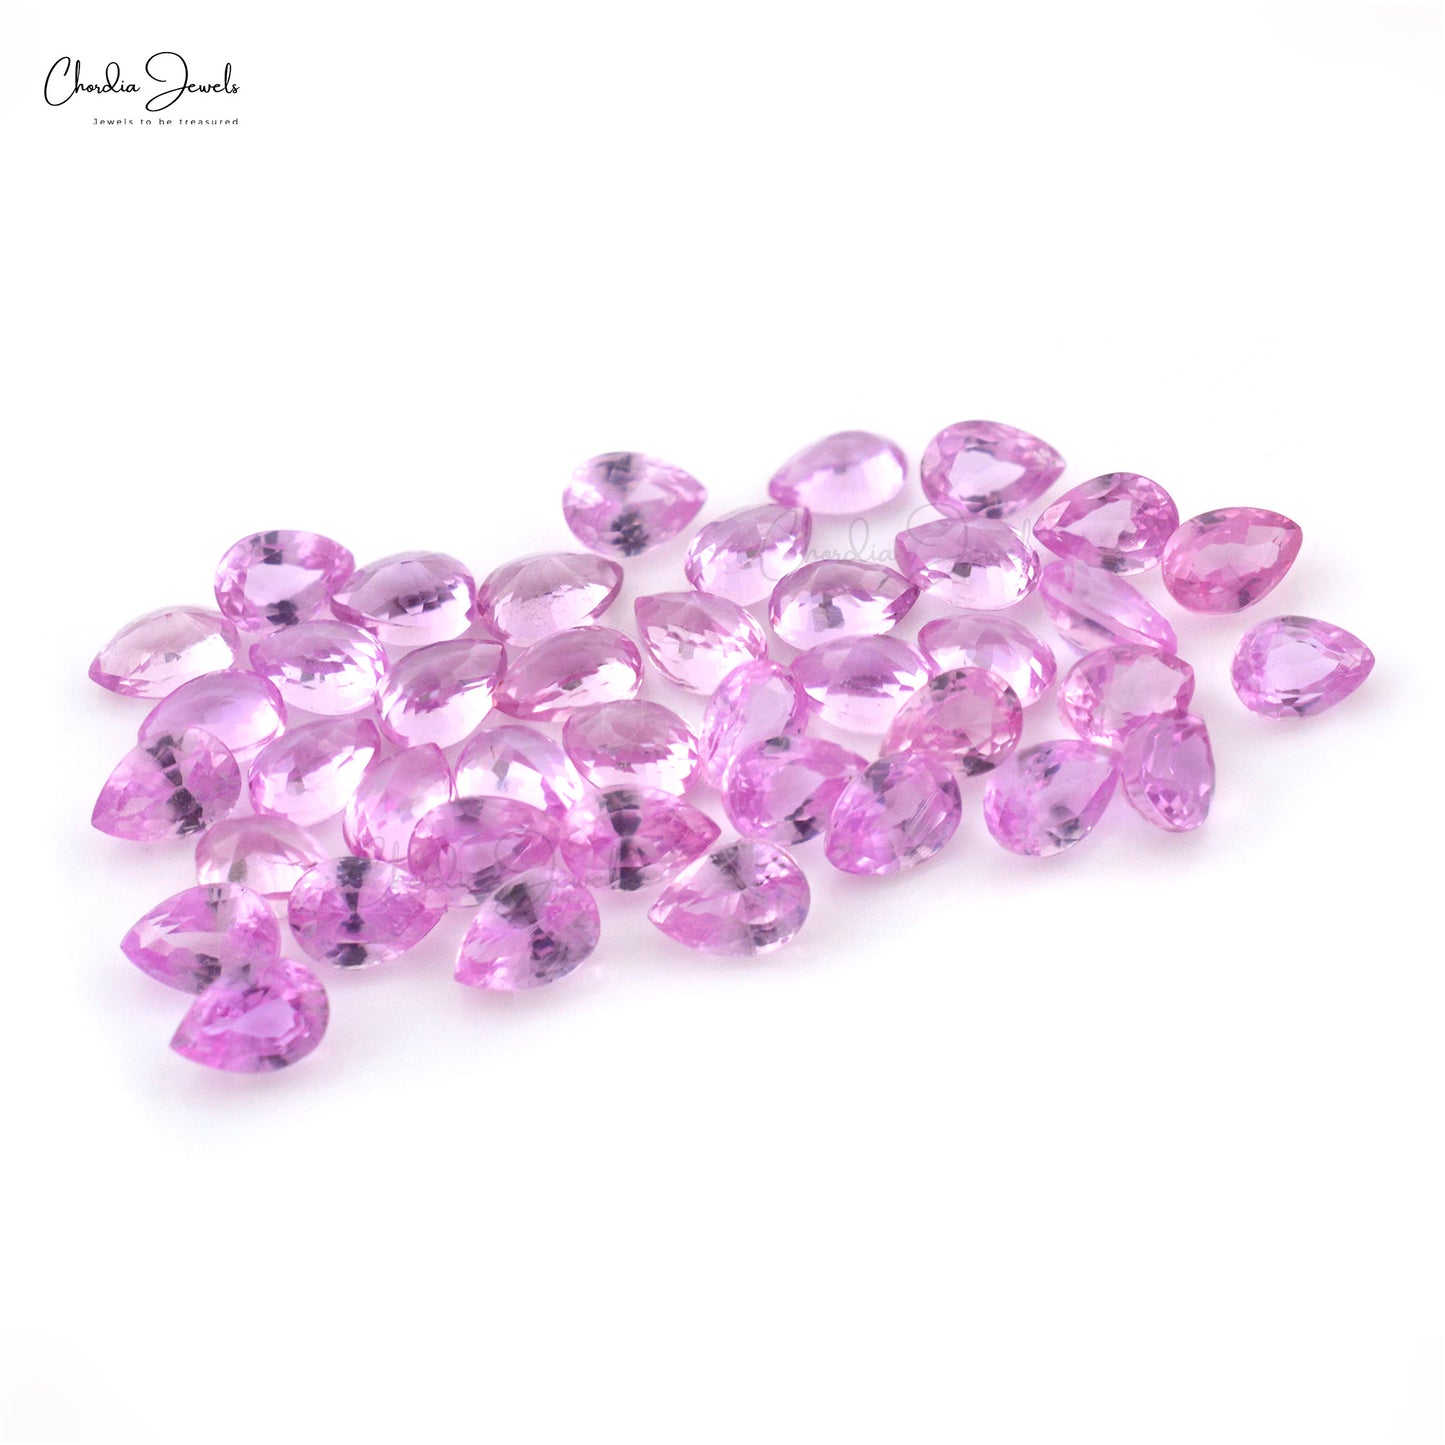 4x3mm Pink Sapphire Pear Cut a Variety Of Corundum Precious Gemstone, 1 Piece